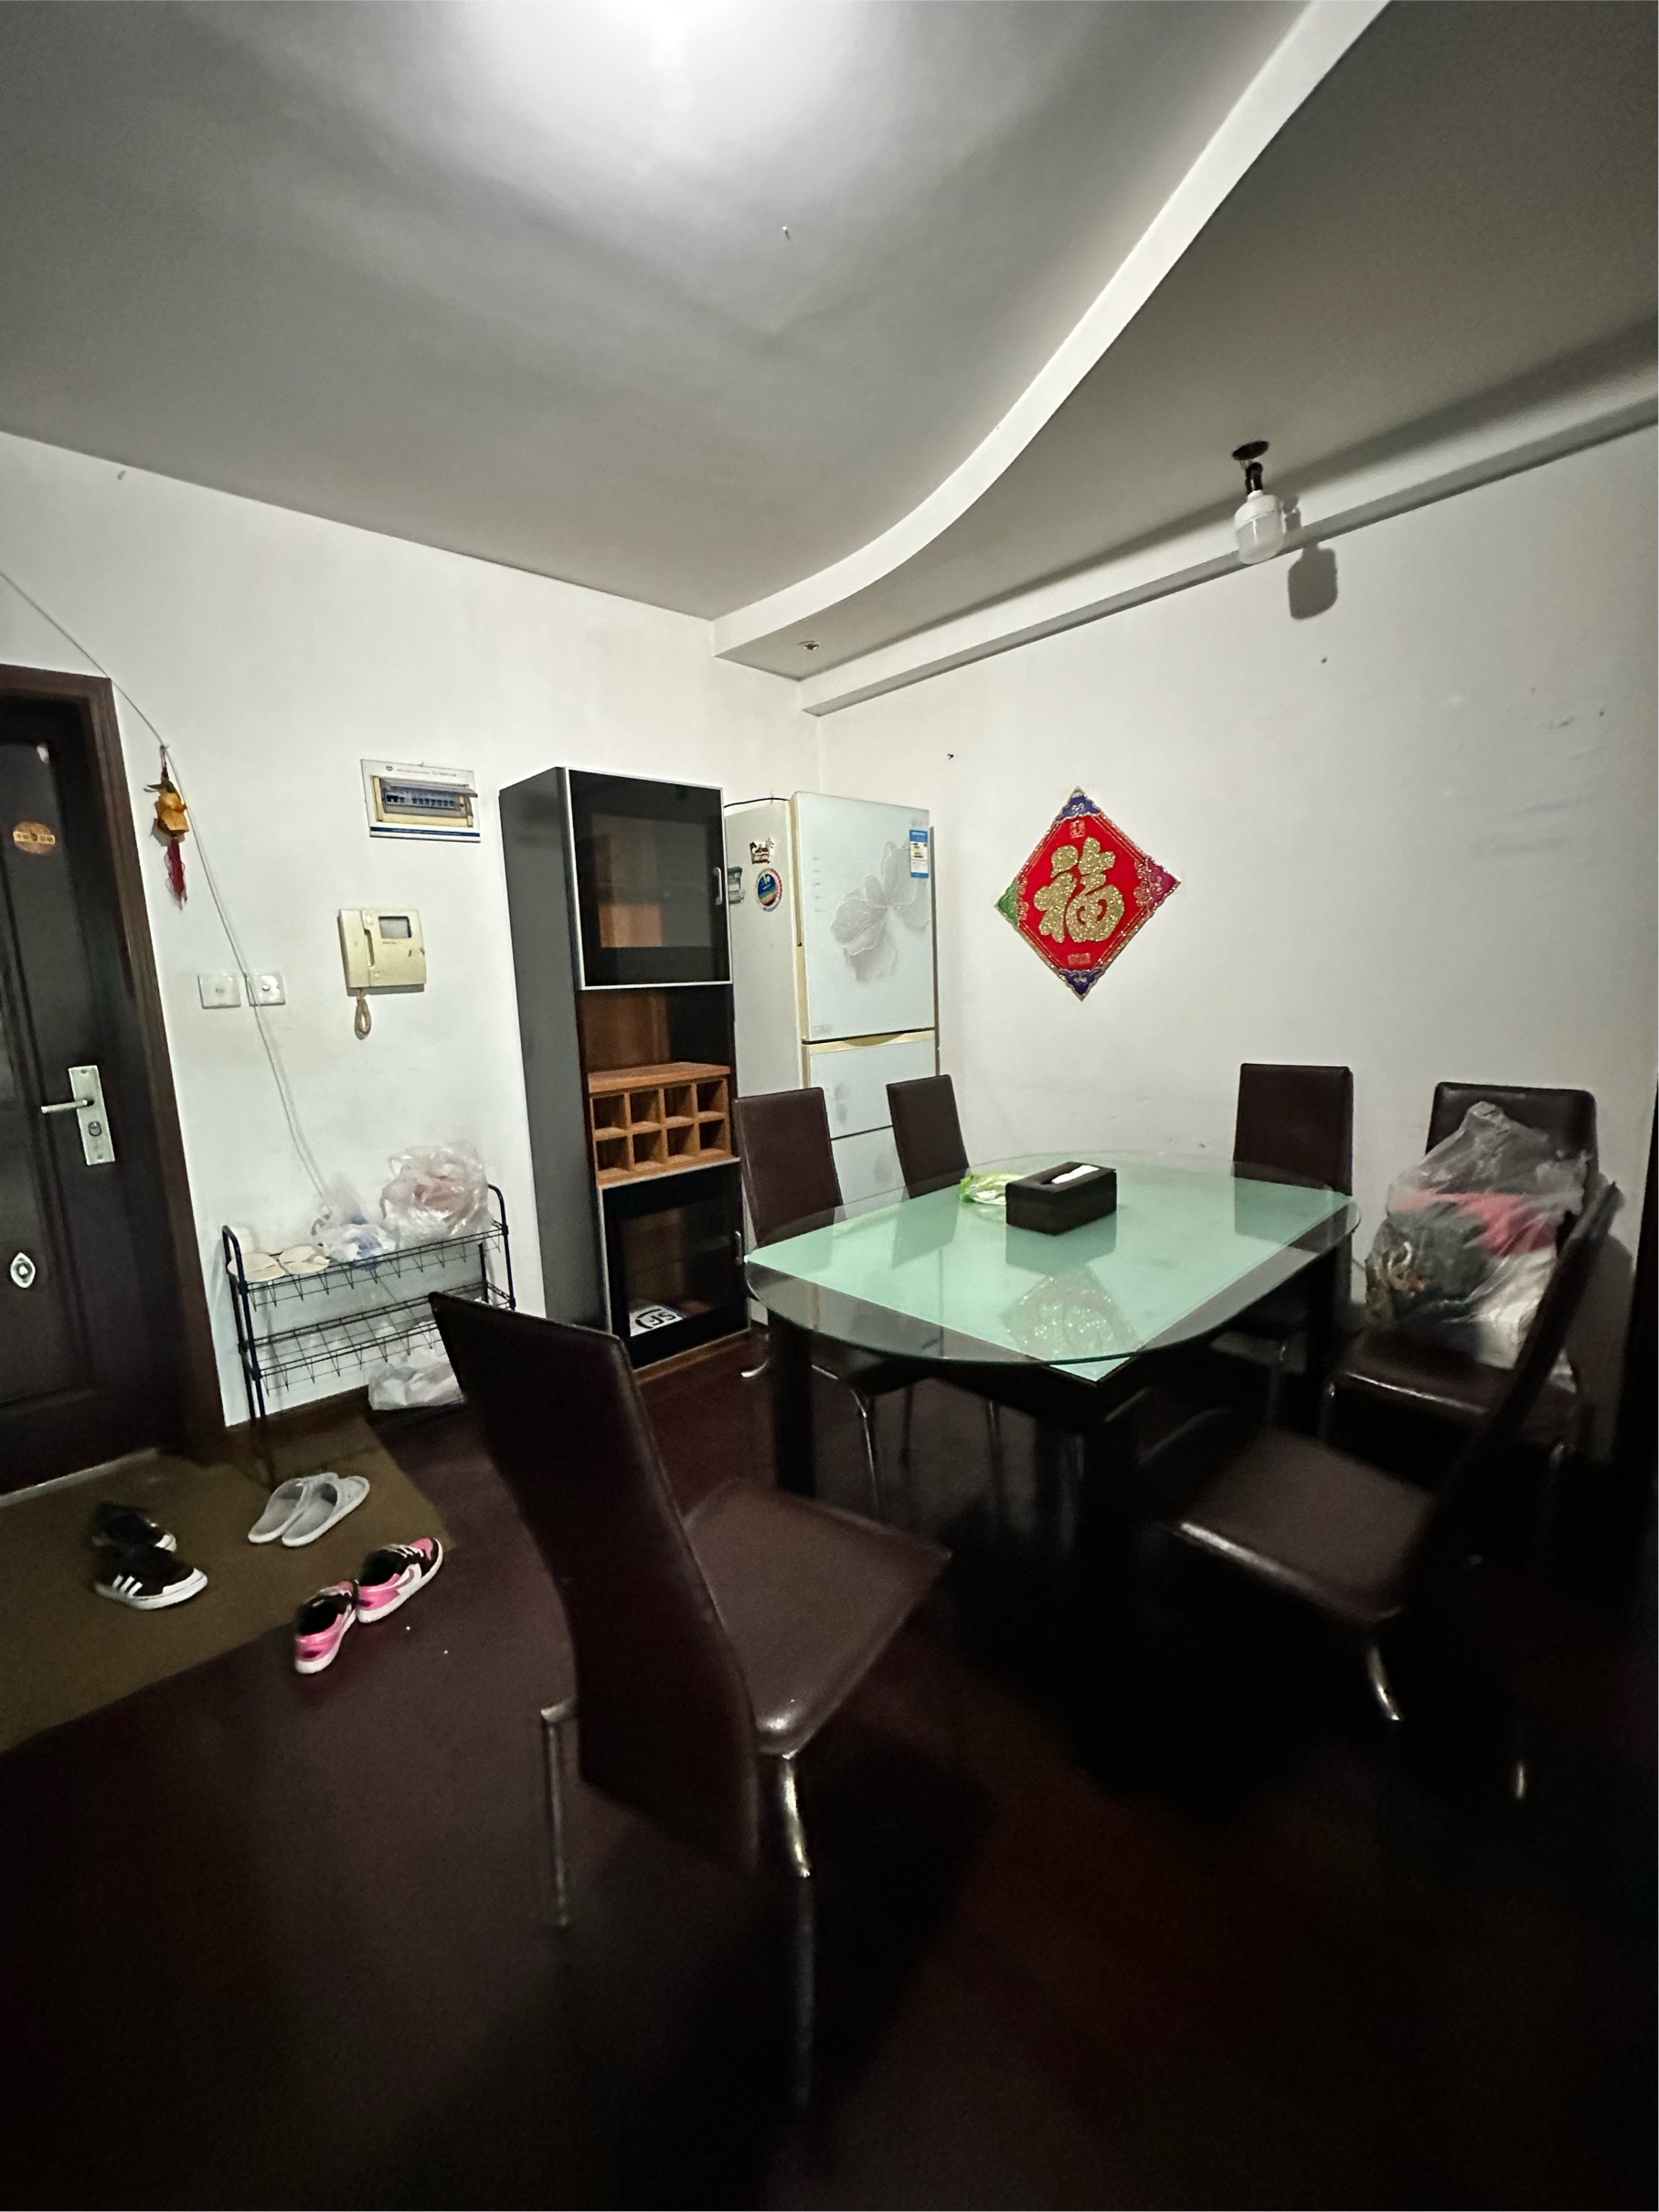 Shanghai-Putuo-Cozy Home,Clean&Comfy,No Gender Limit,Hustle & Bustle,“Friends”,Chilled,LGBTQ Friendly